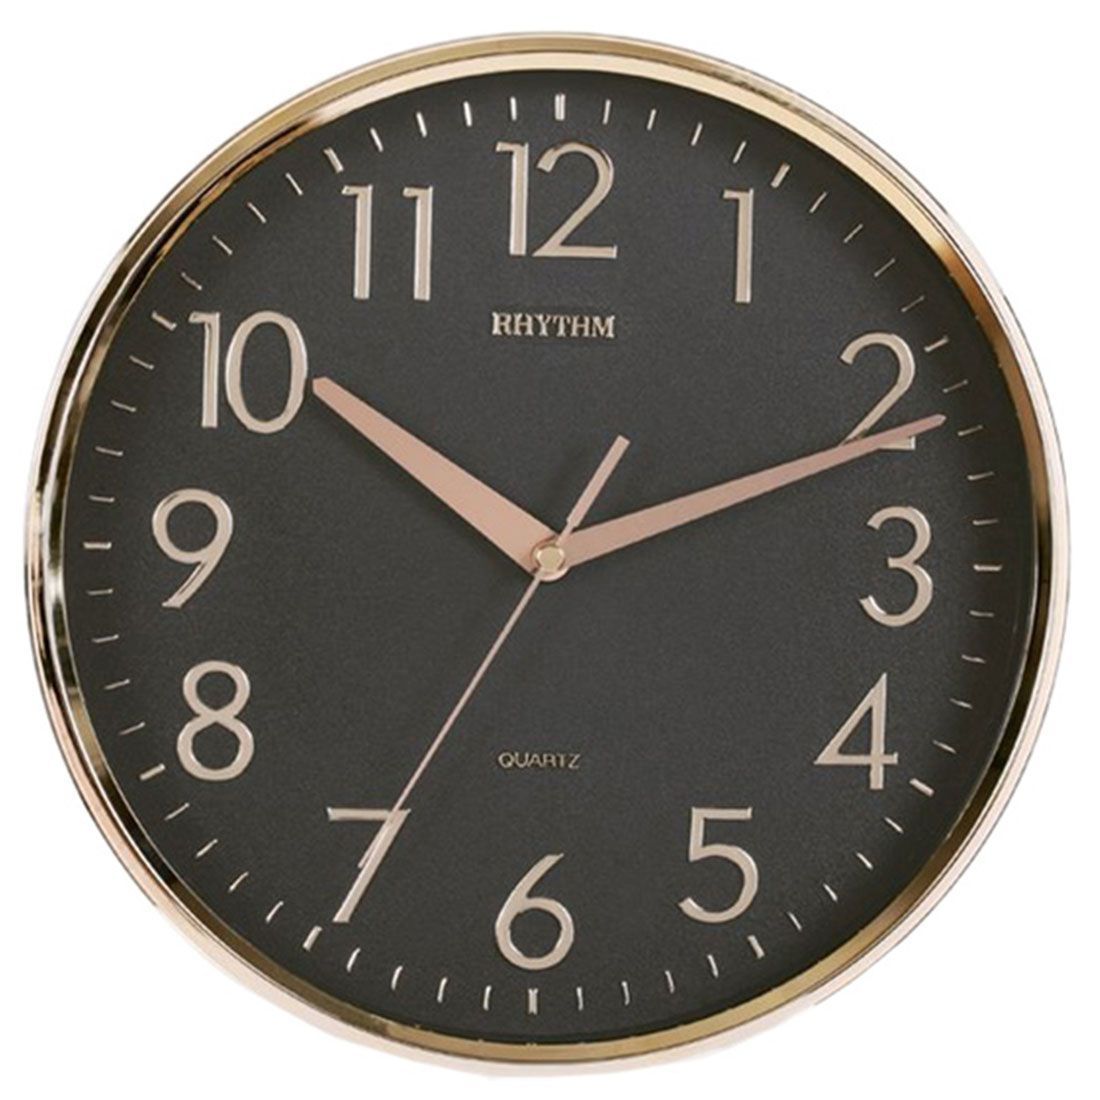 Rhythm Wall Clock CMG716CR65 | stylish watch | accurate timekeeping | wall clock | round clock | Casio watch | wall watch | home décor | timepiece | Halabh.com